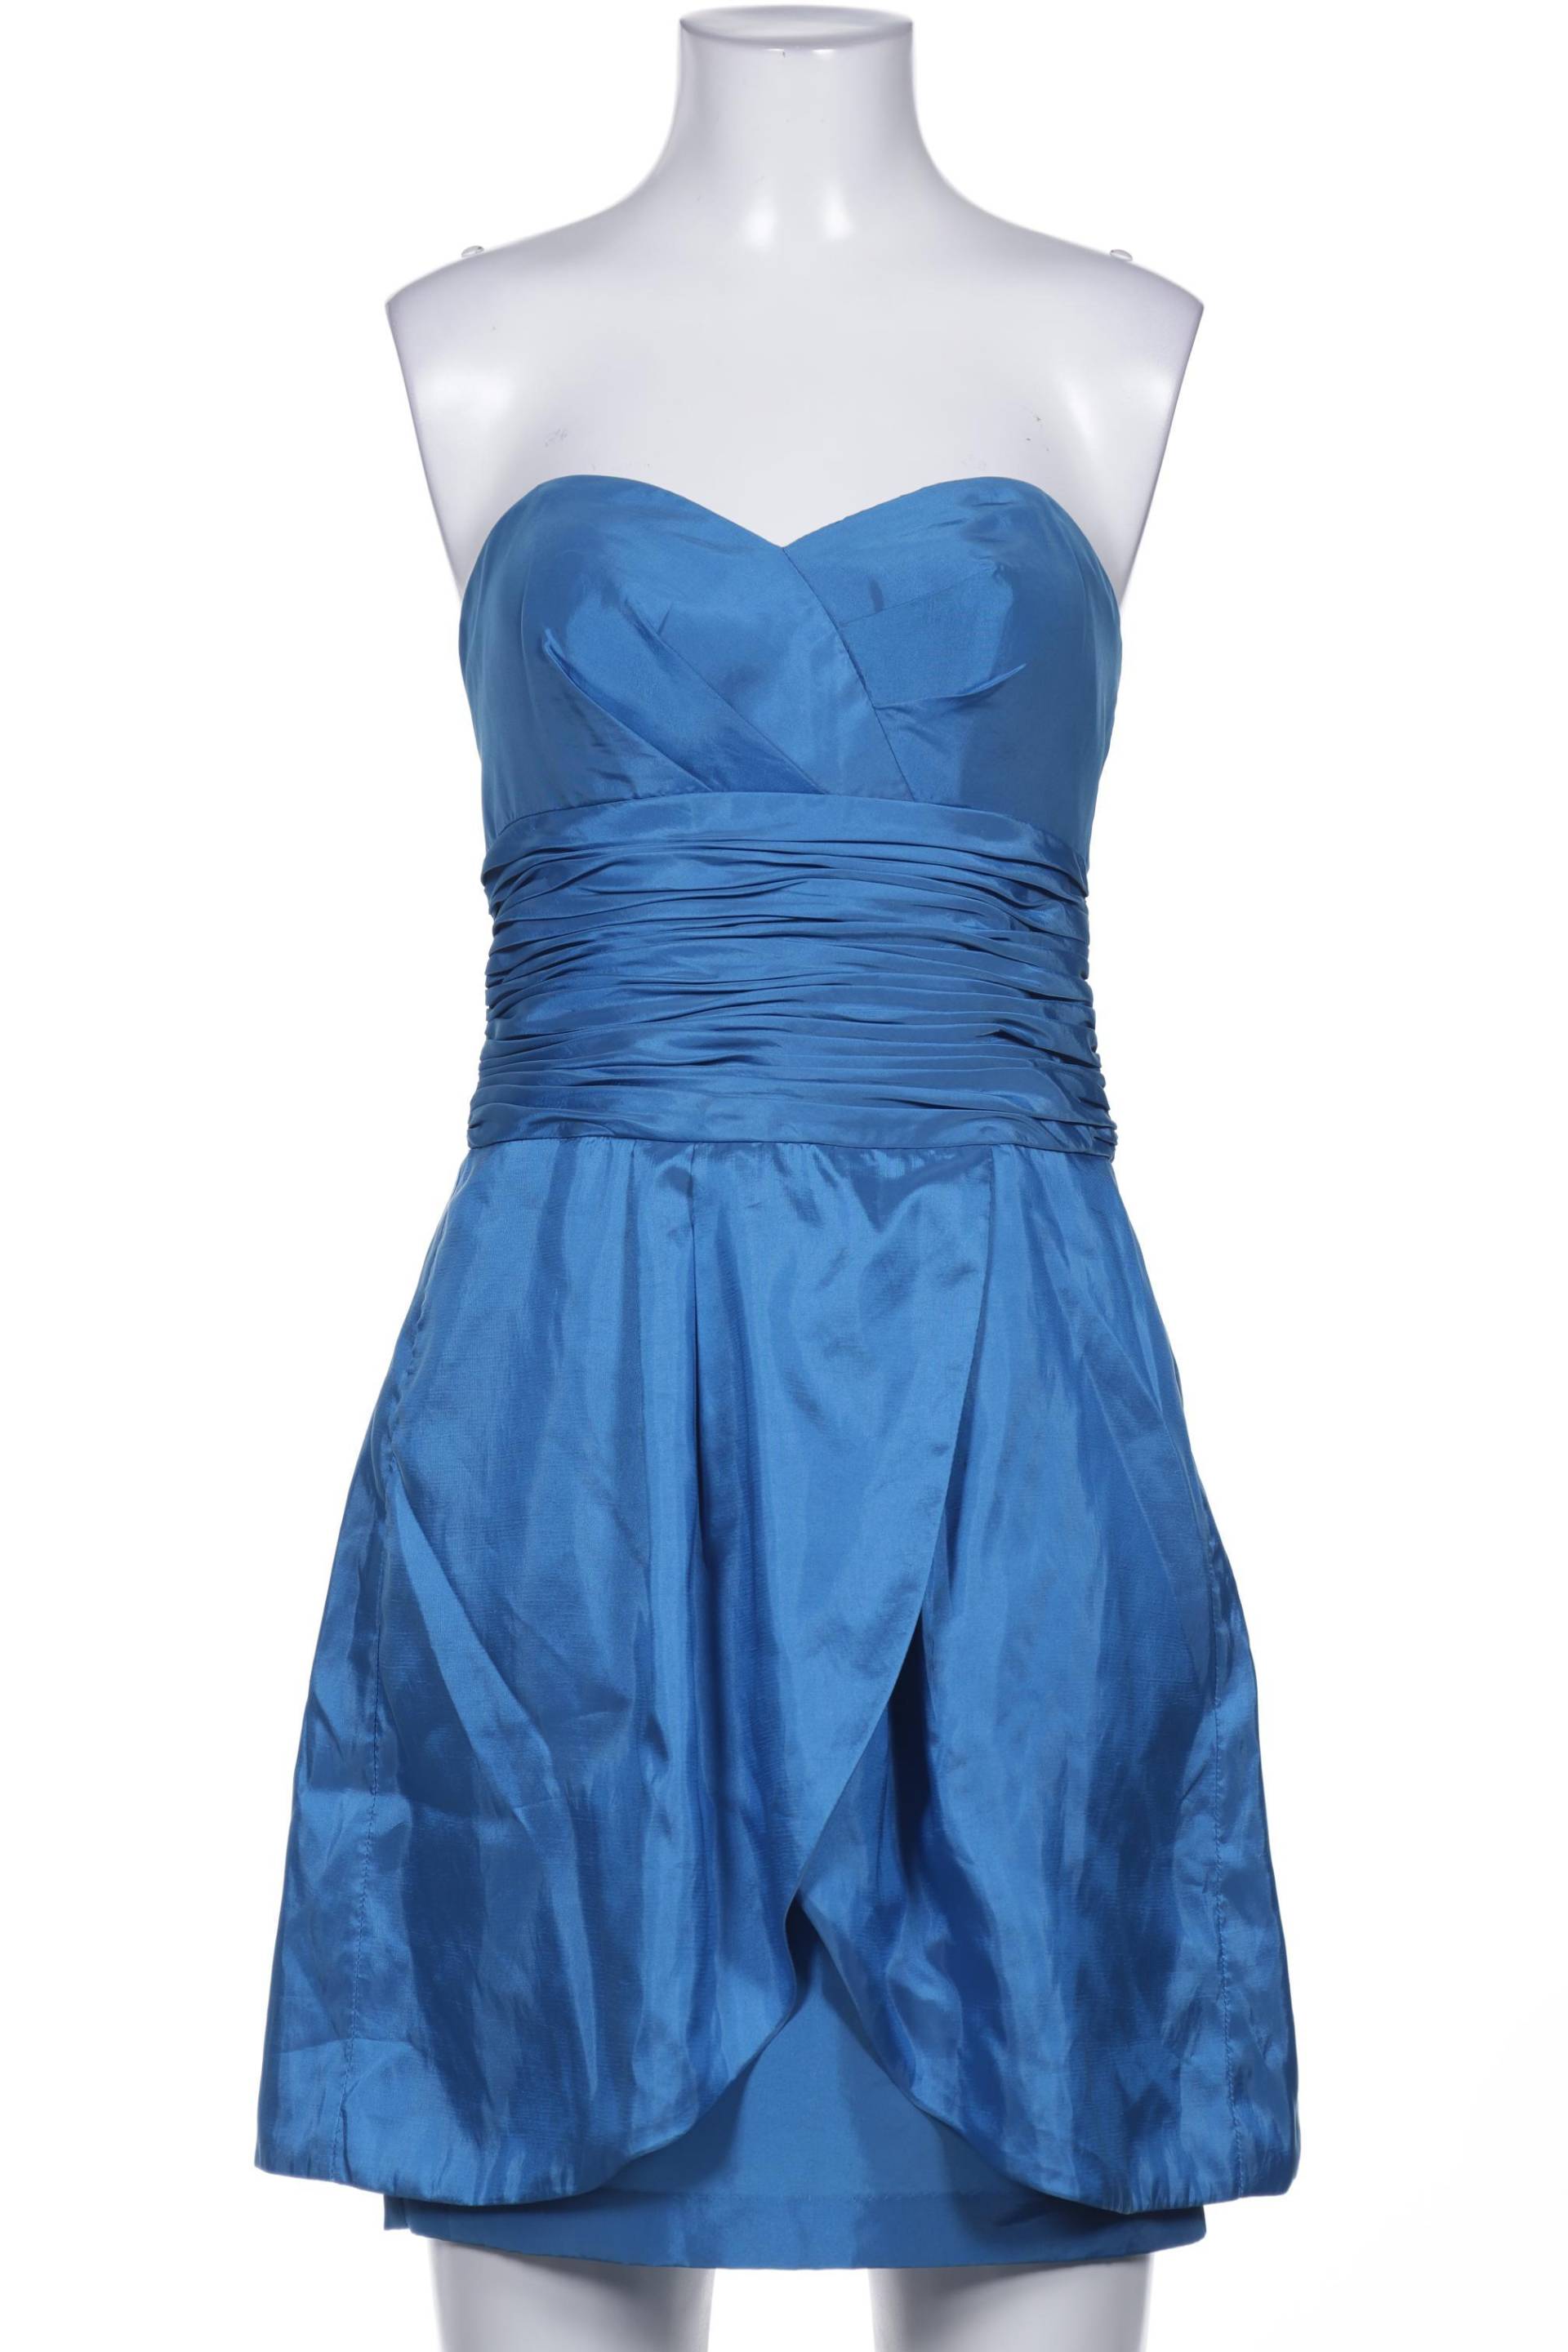 LAONA Damen Kleid, blau von LAONA